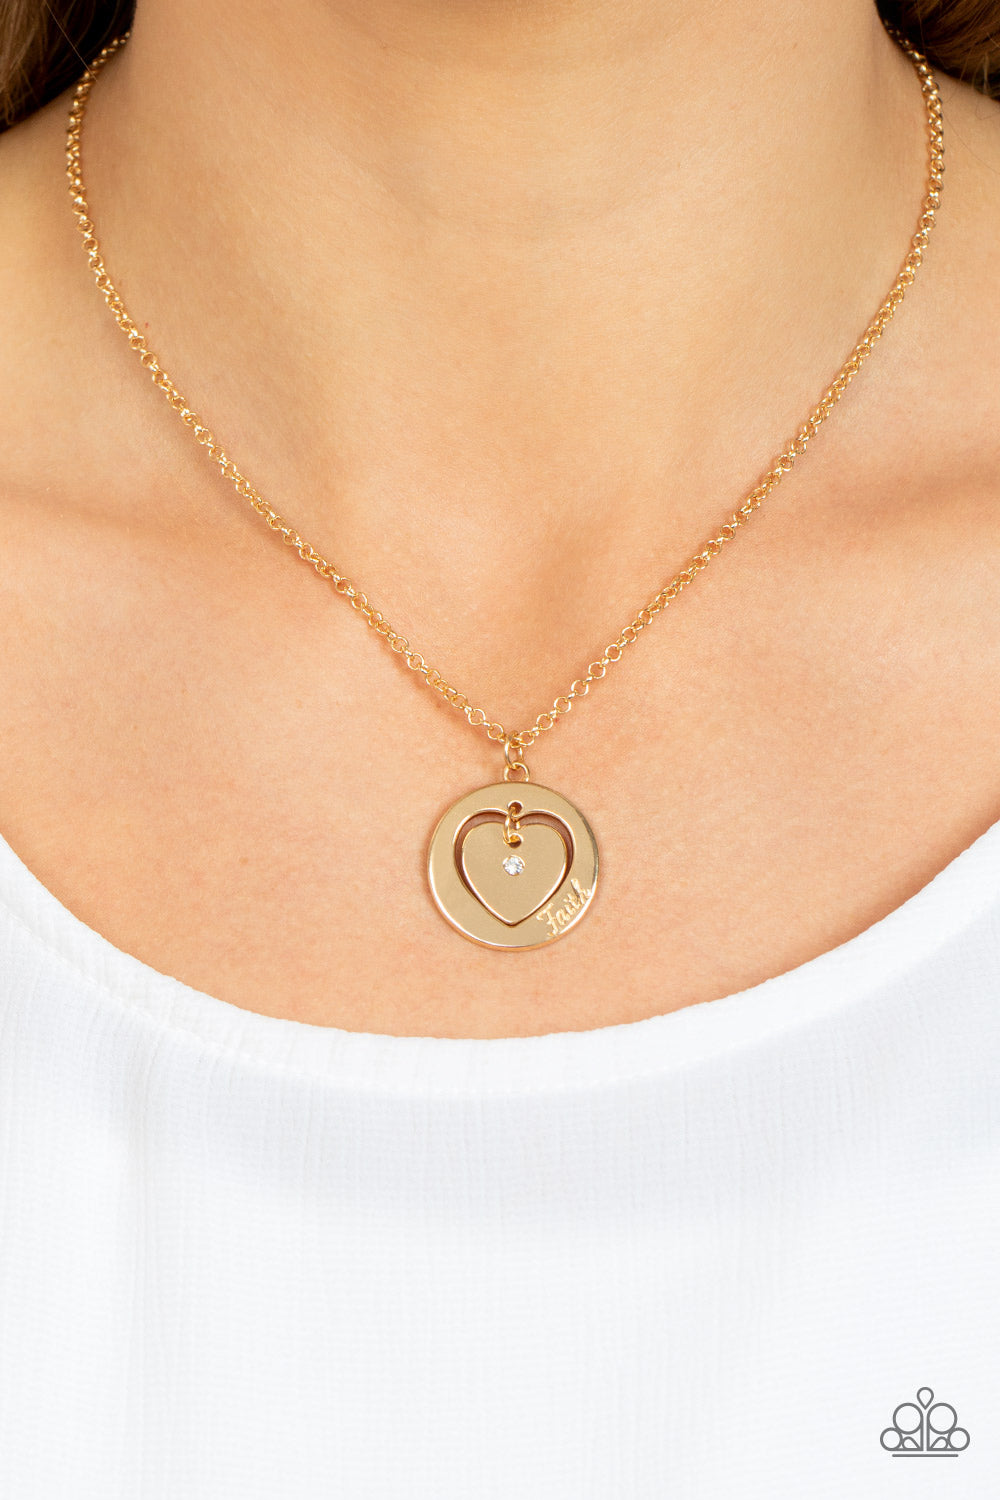 Heart Full of Faith - Gold Necklace Set - Princess Glam Shop